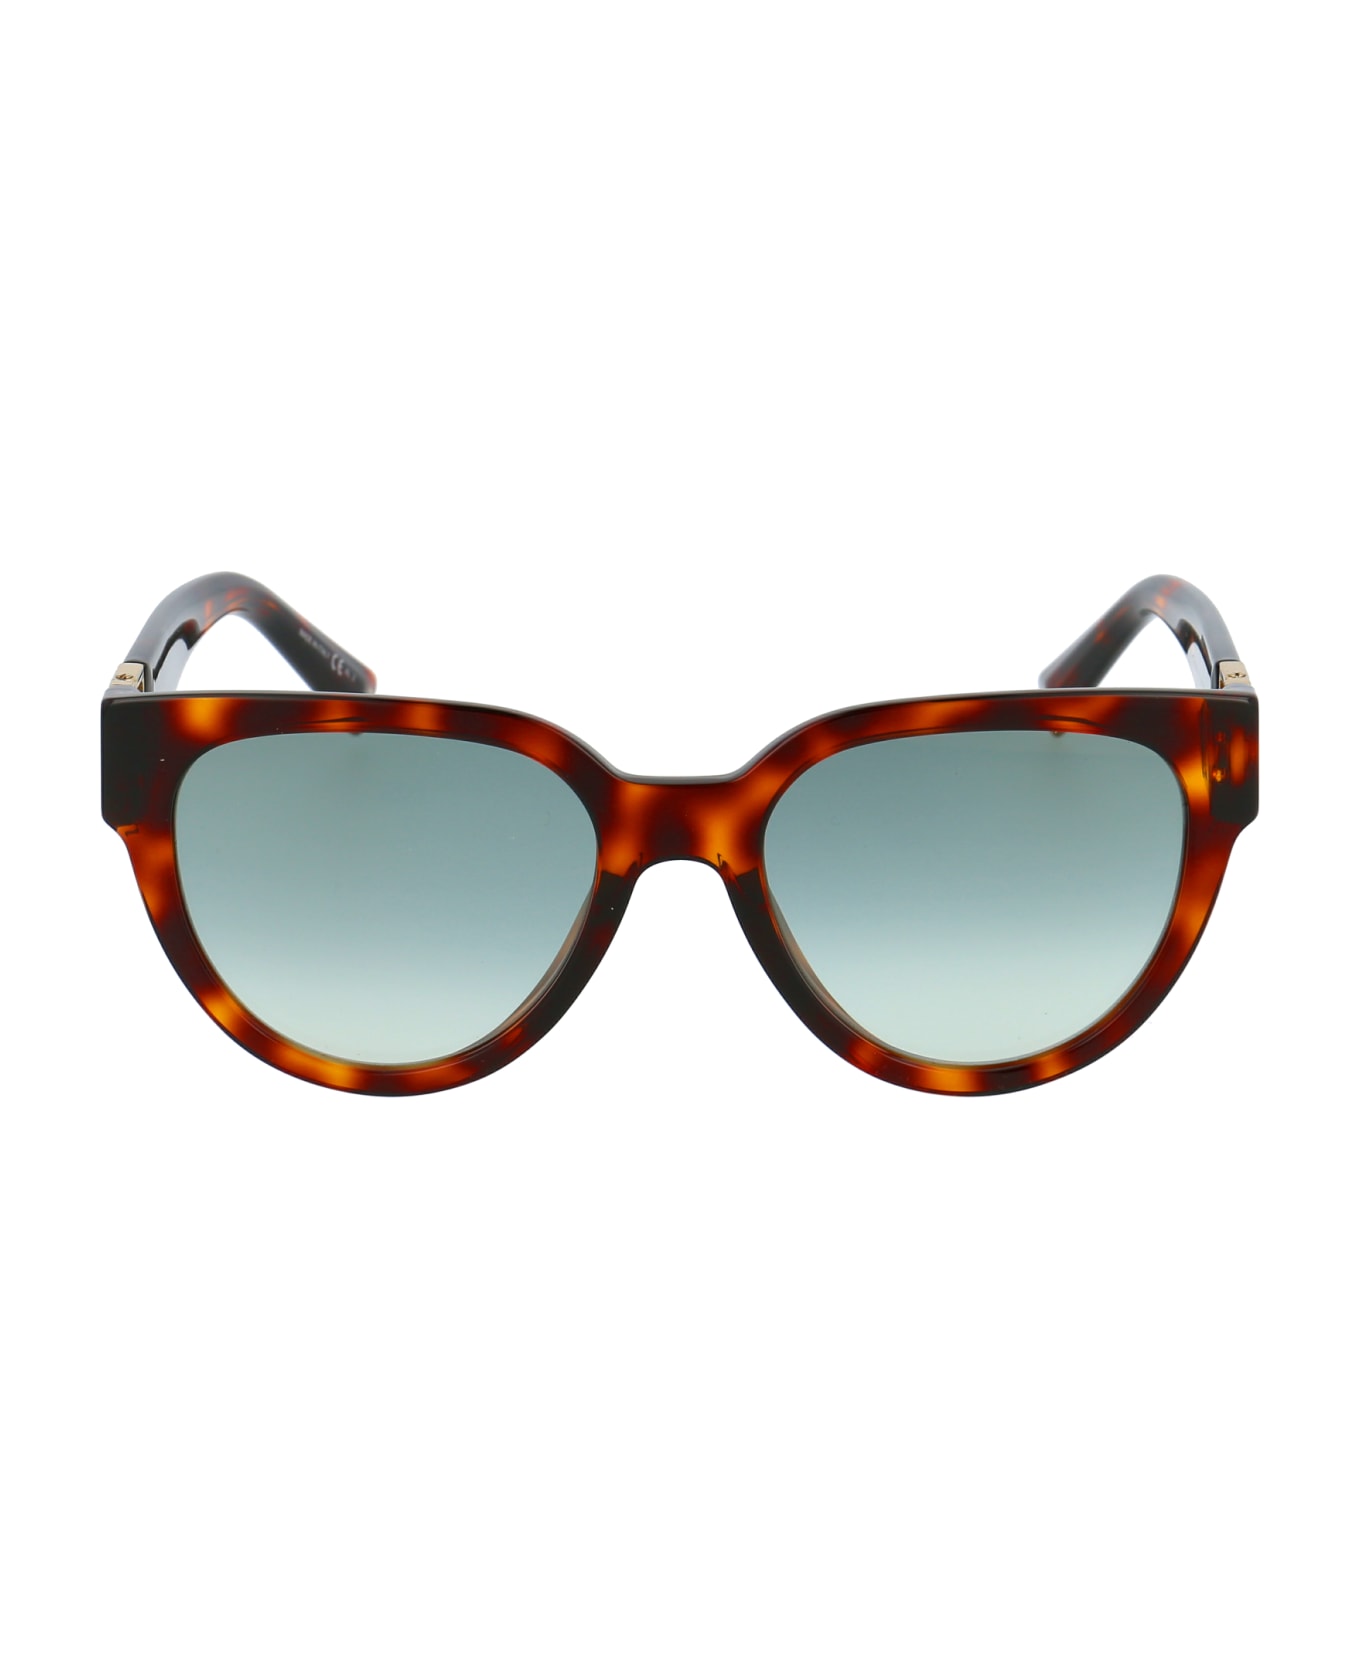 Givenchy Eyewear Gv 7155/g/s Sunglasses - 0UCEZ RED HAVNA